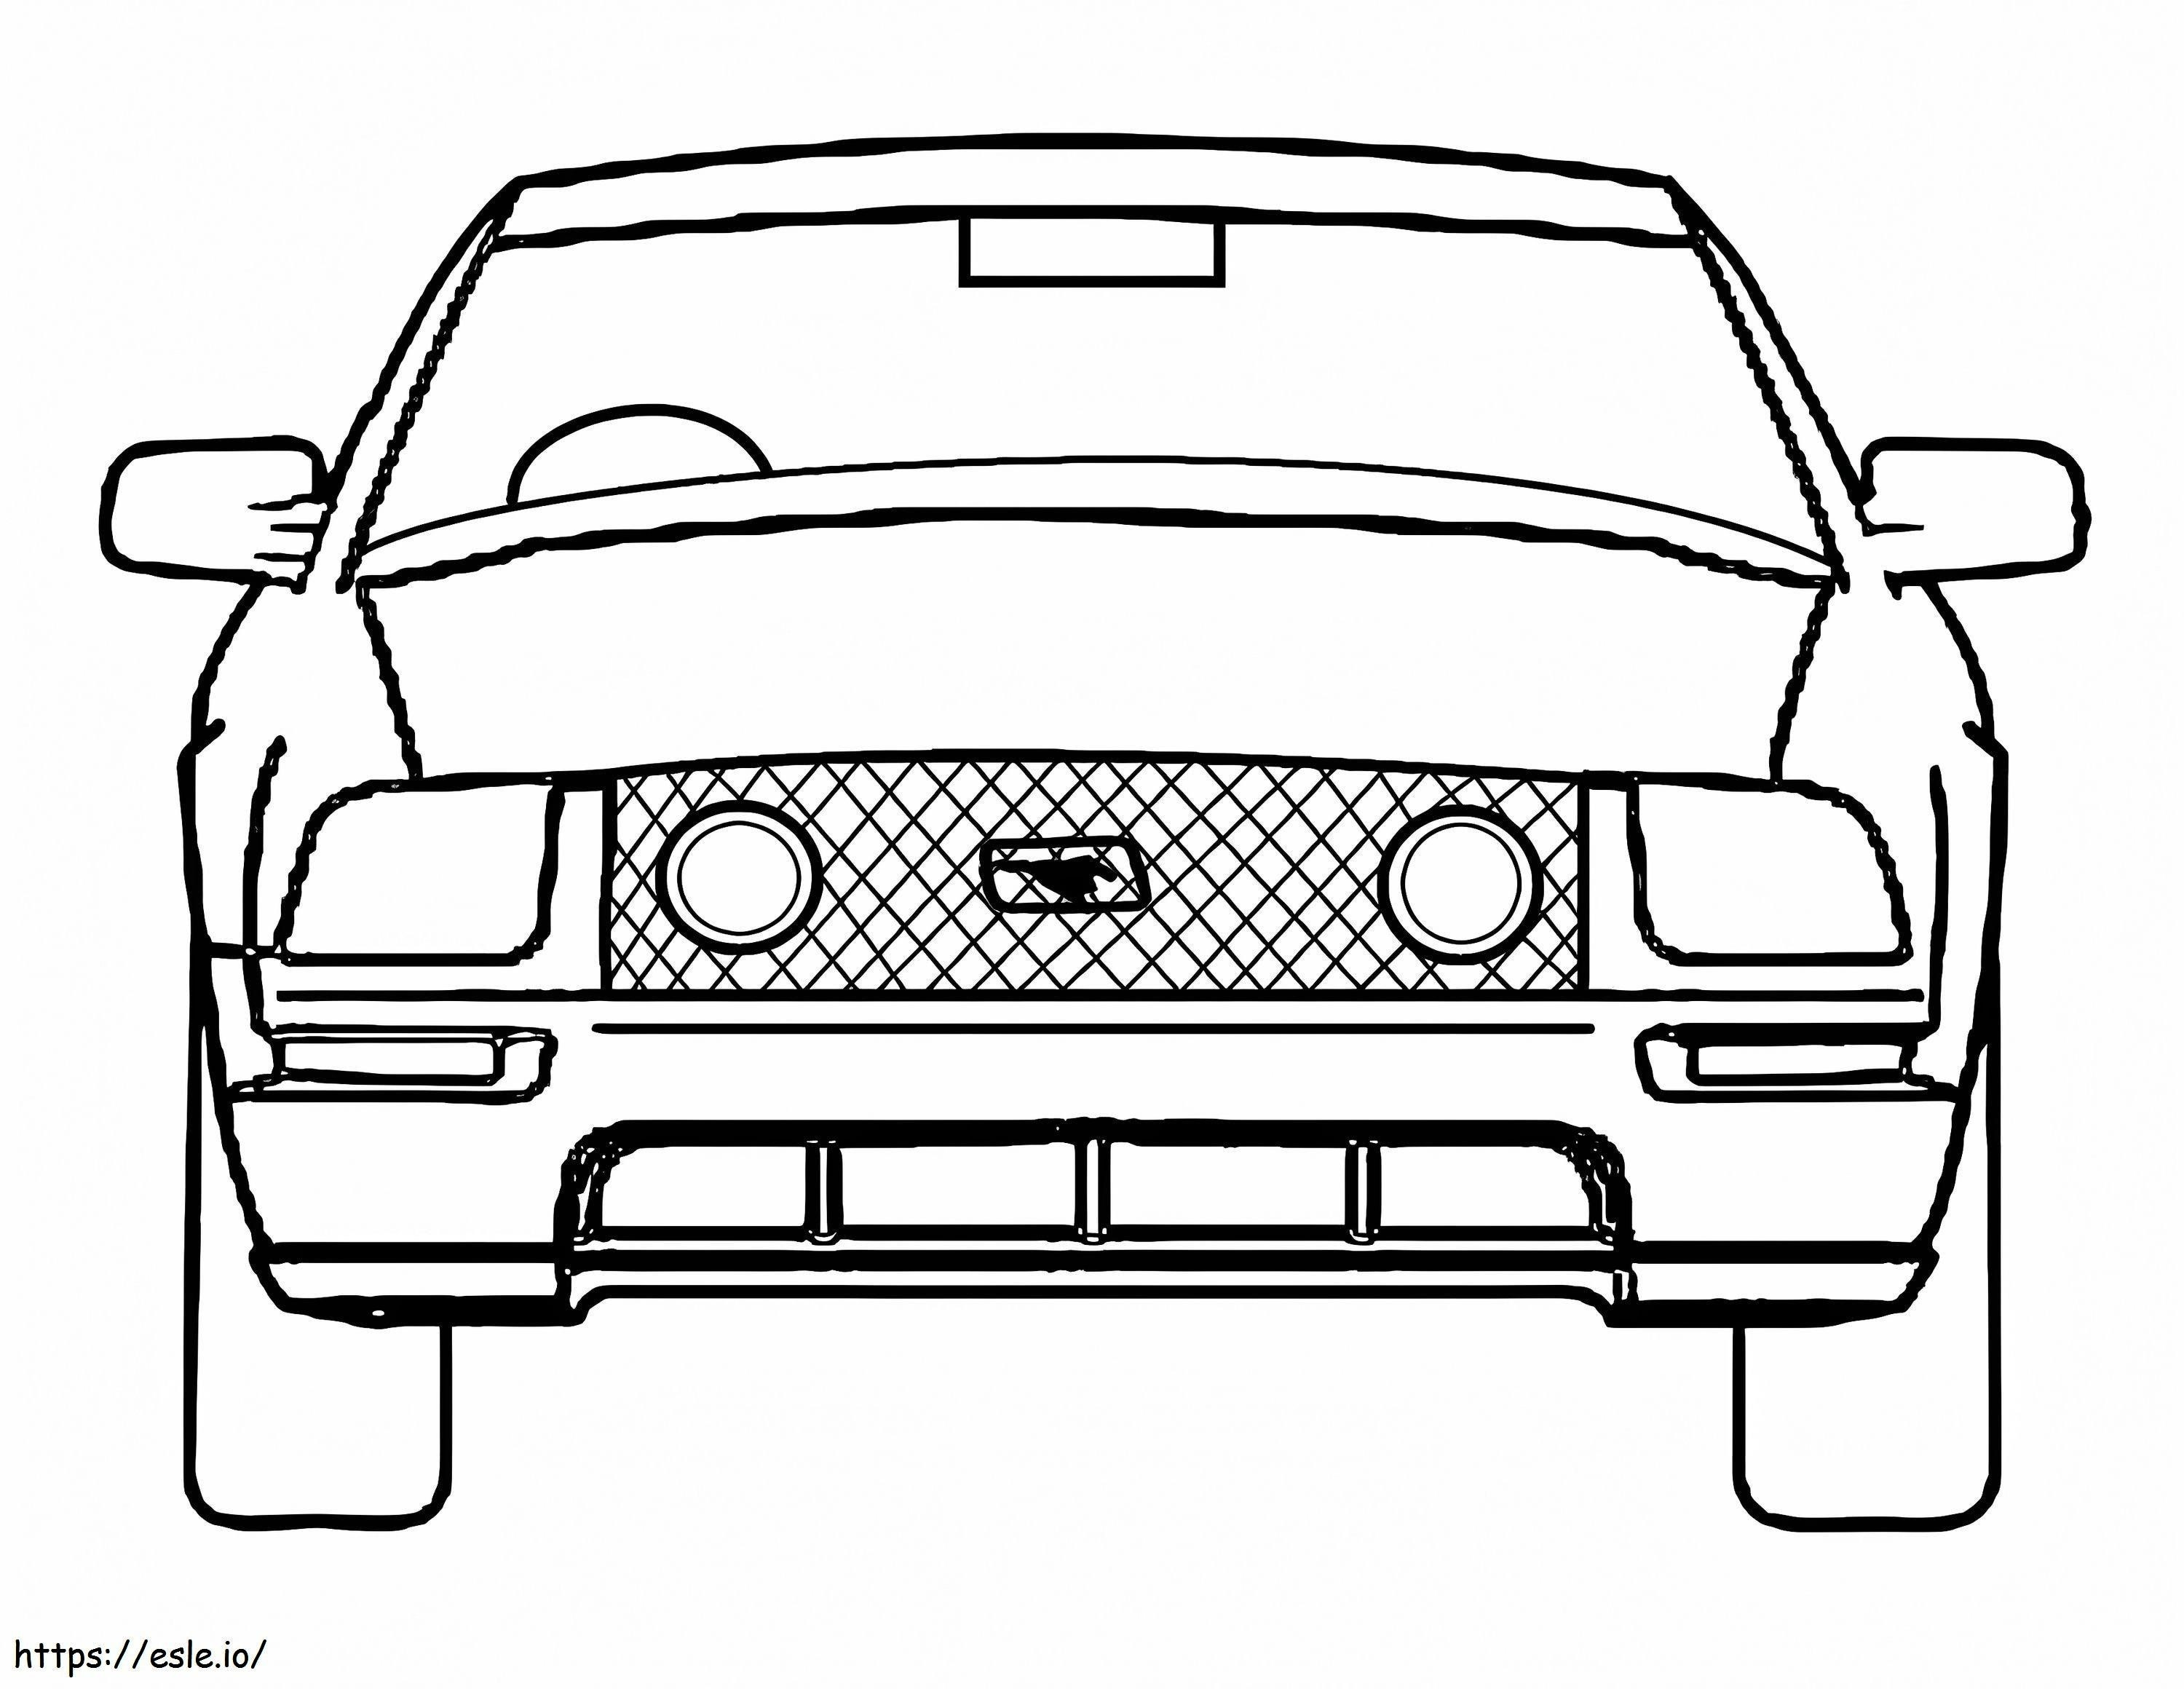 Vista frontal do Mustang para colorir